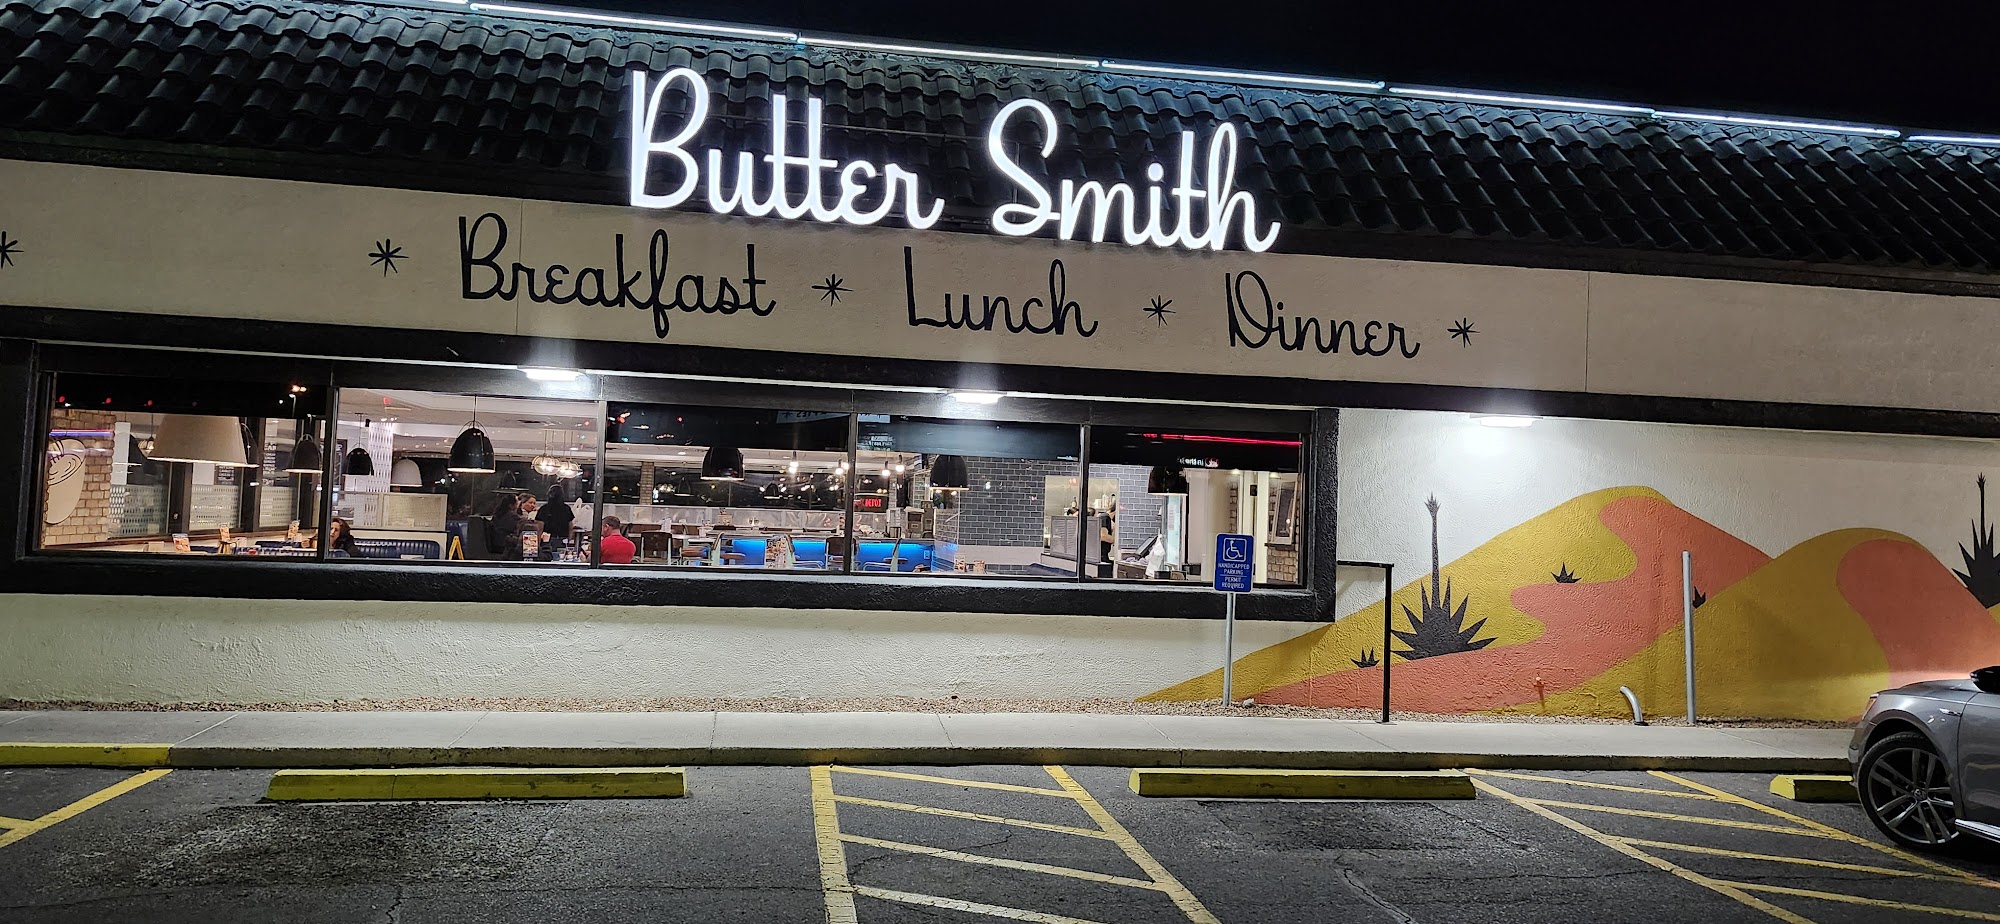 Butter Smith Kitchen & Pies